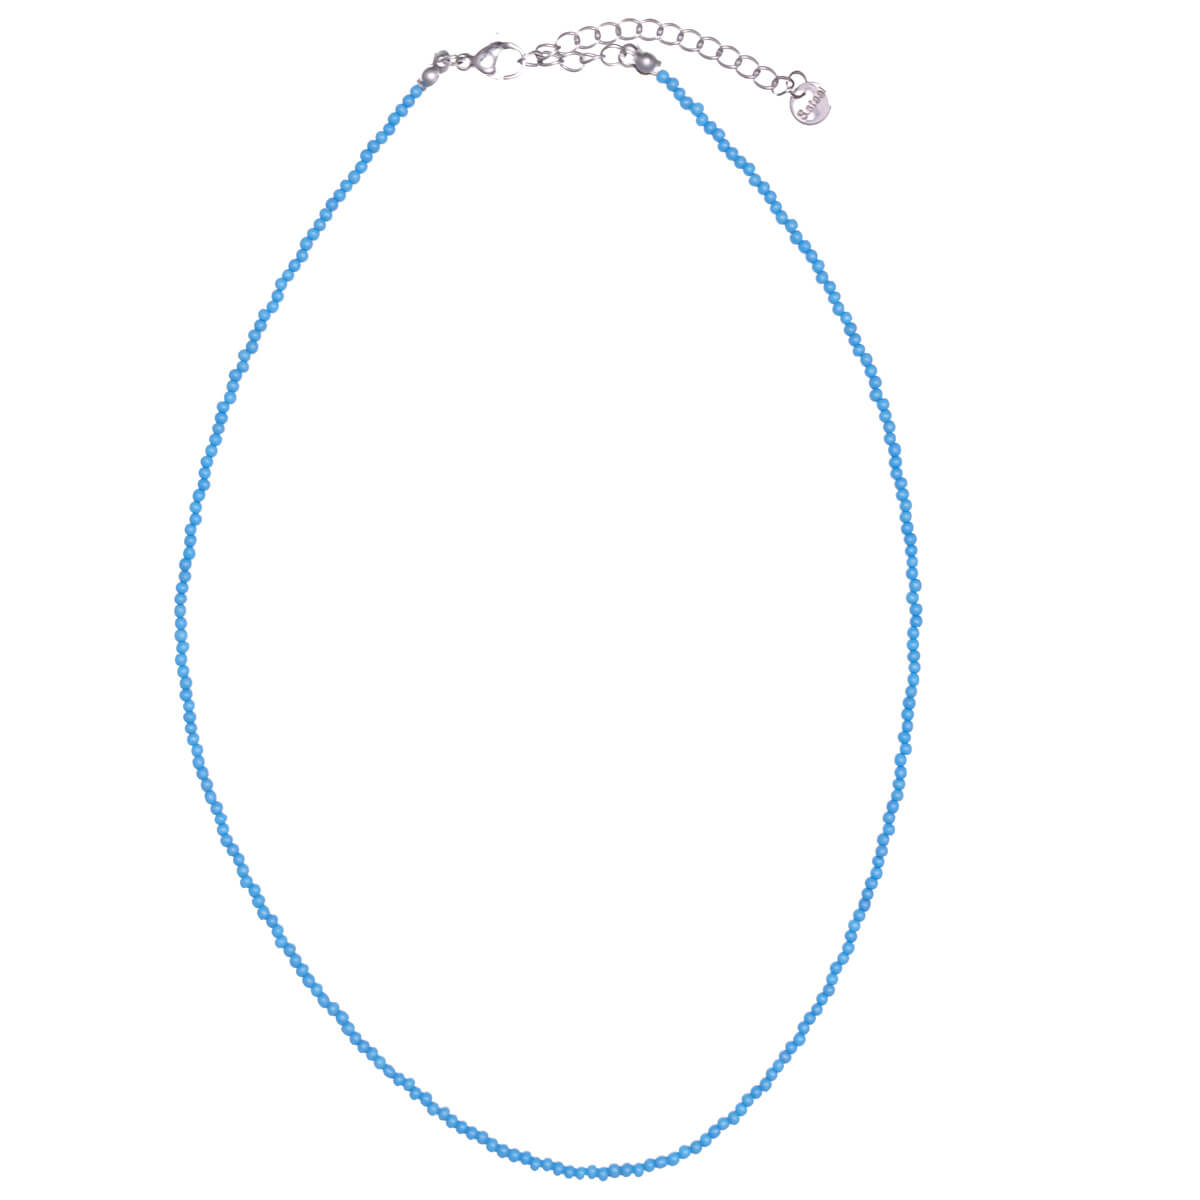 Tunn nackpärlor halsband 40 cm +5 cm (stål 316L)